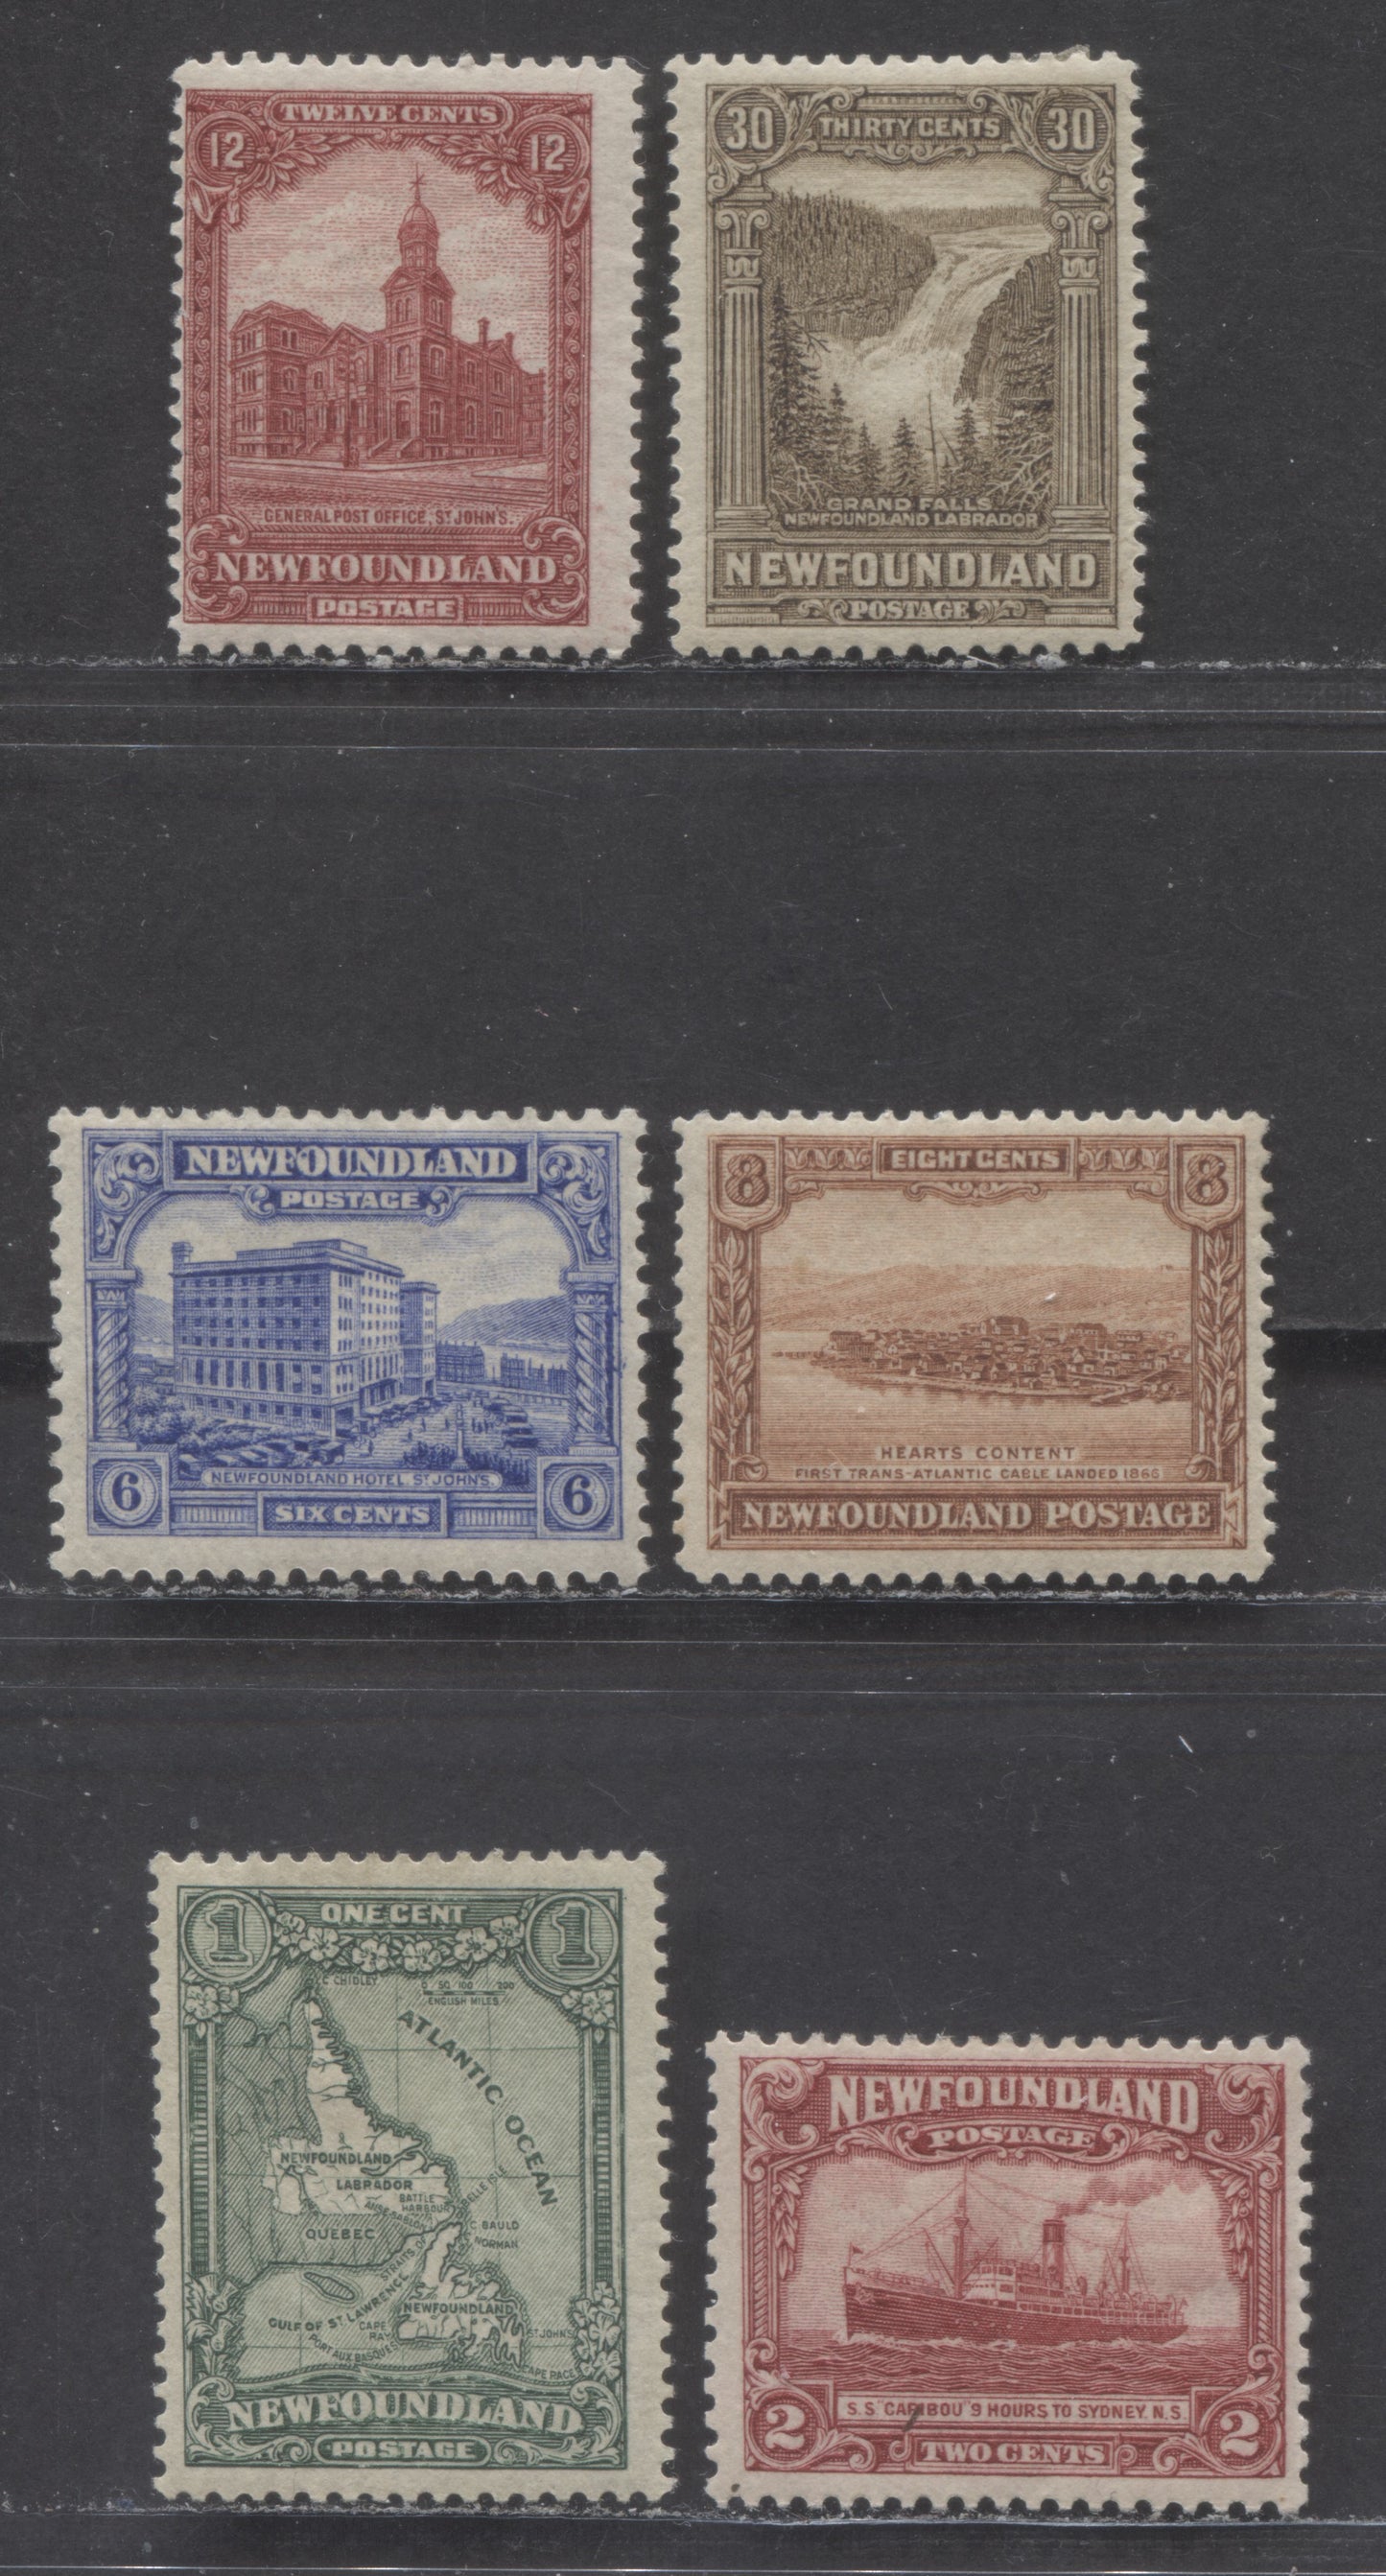 Lot 69 Newfoundland #145-146, 150-151, 154, 159 , 1928 Pictorial Issue 1, 6 F-VF OG Singles